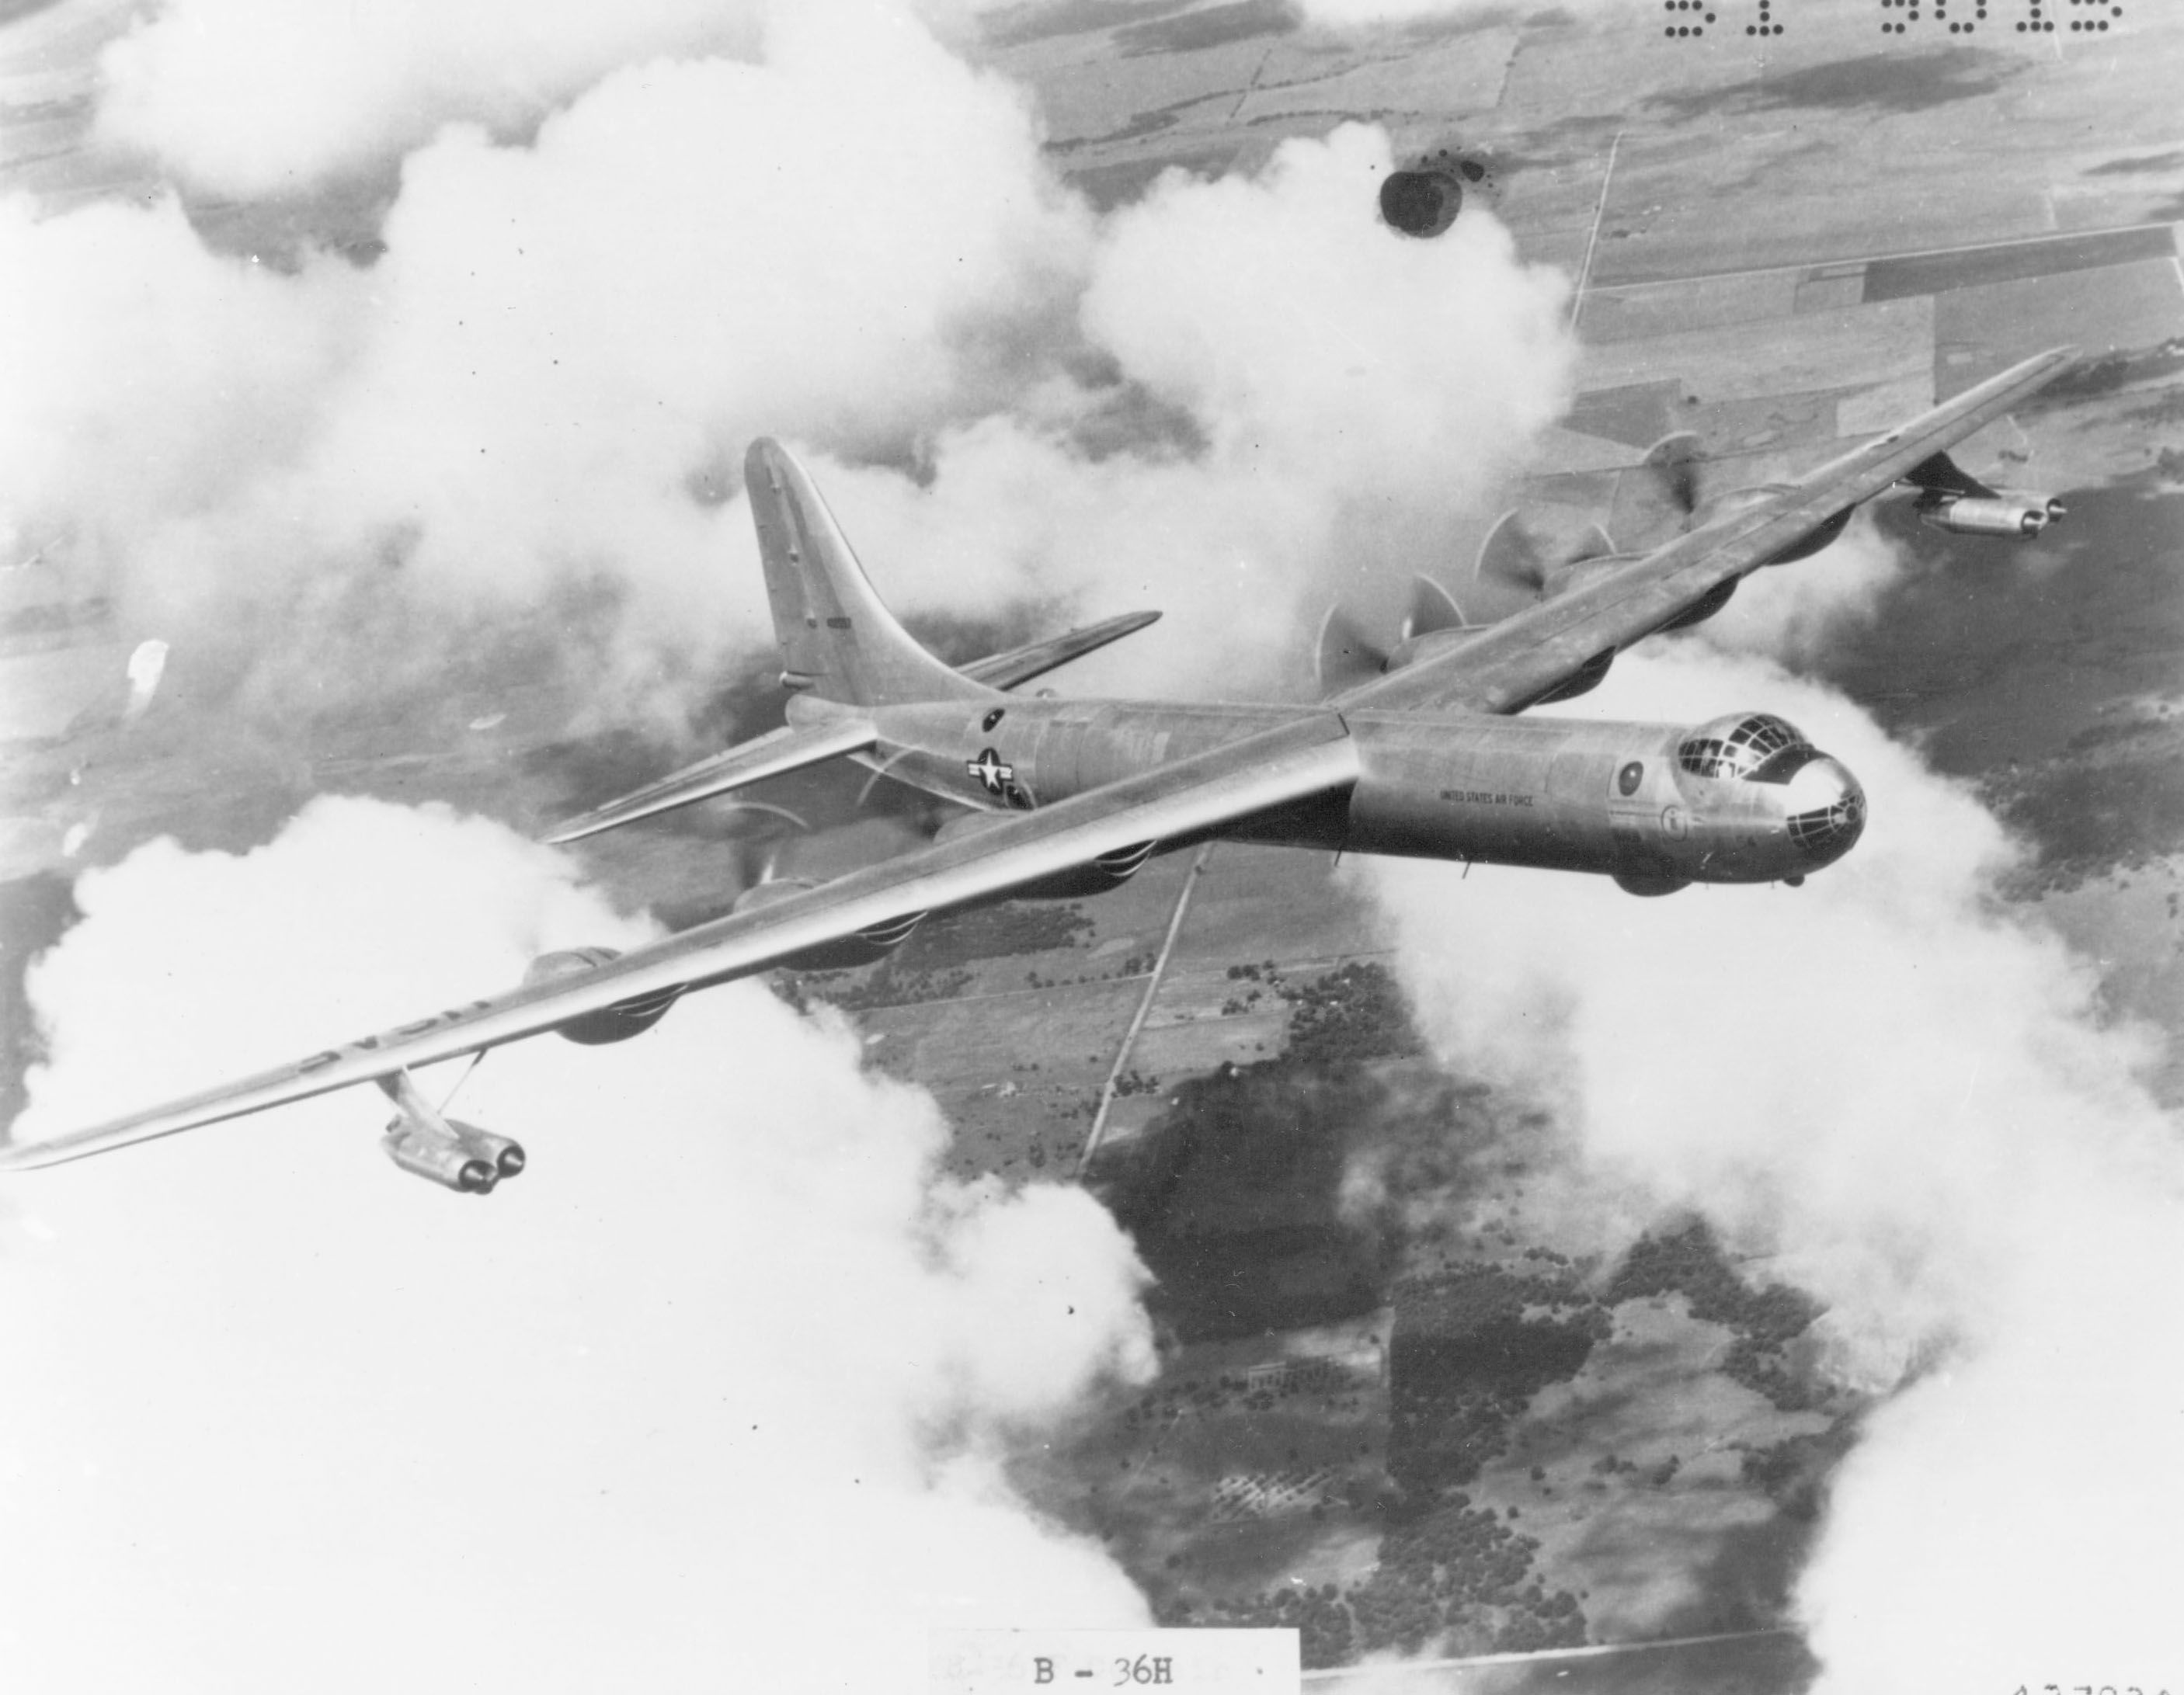 Daydream Notes: The Convair B-36 Peacemaker